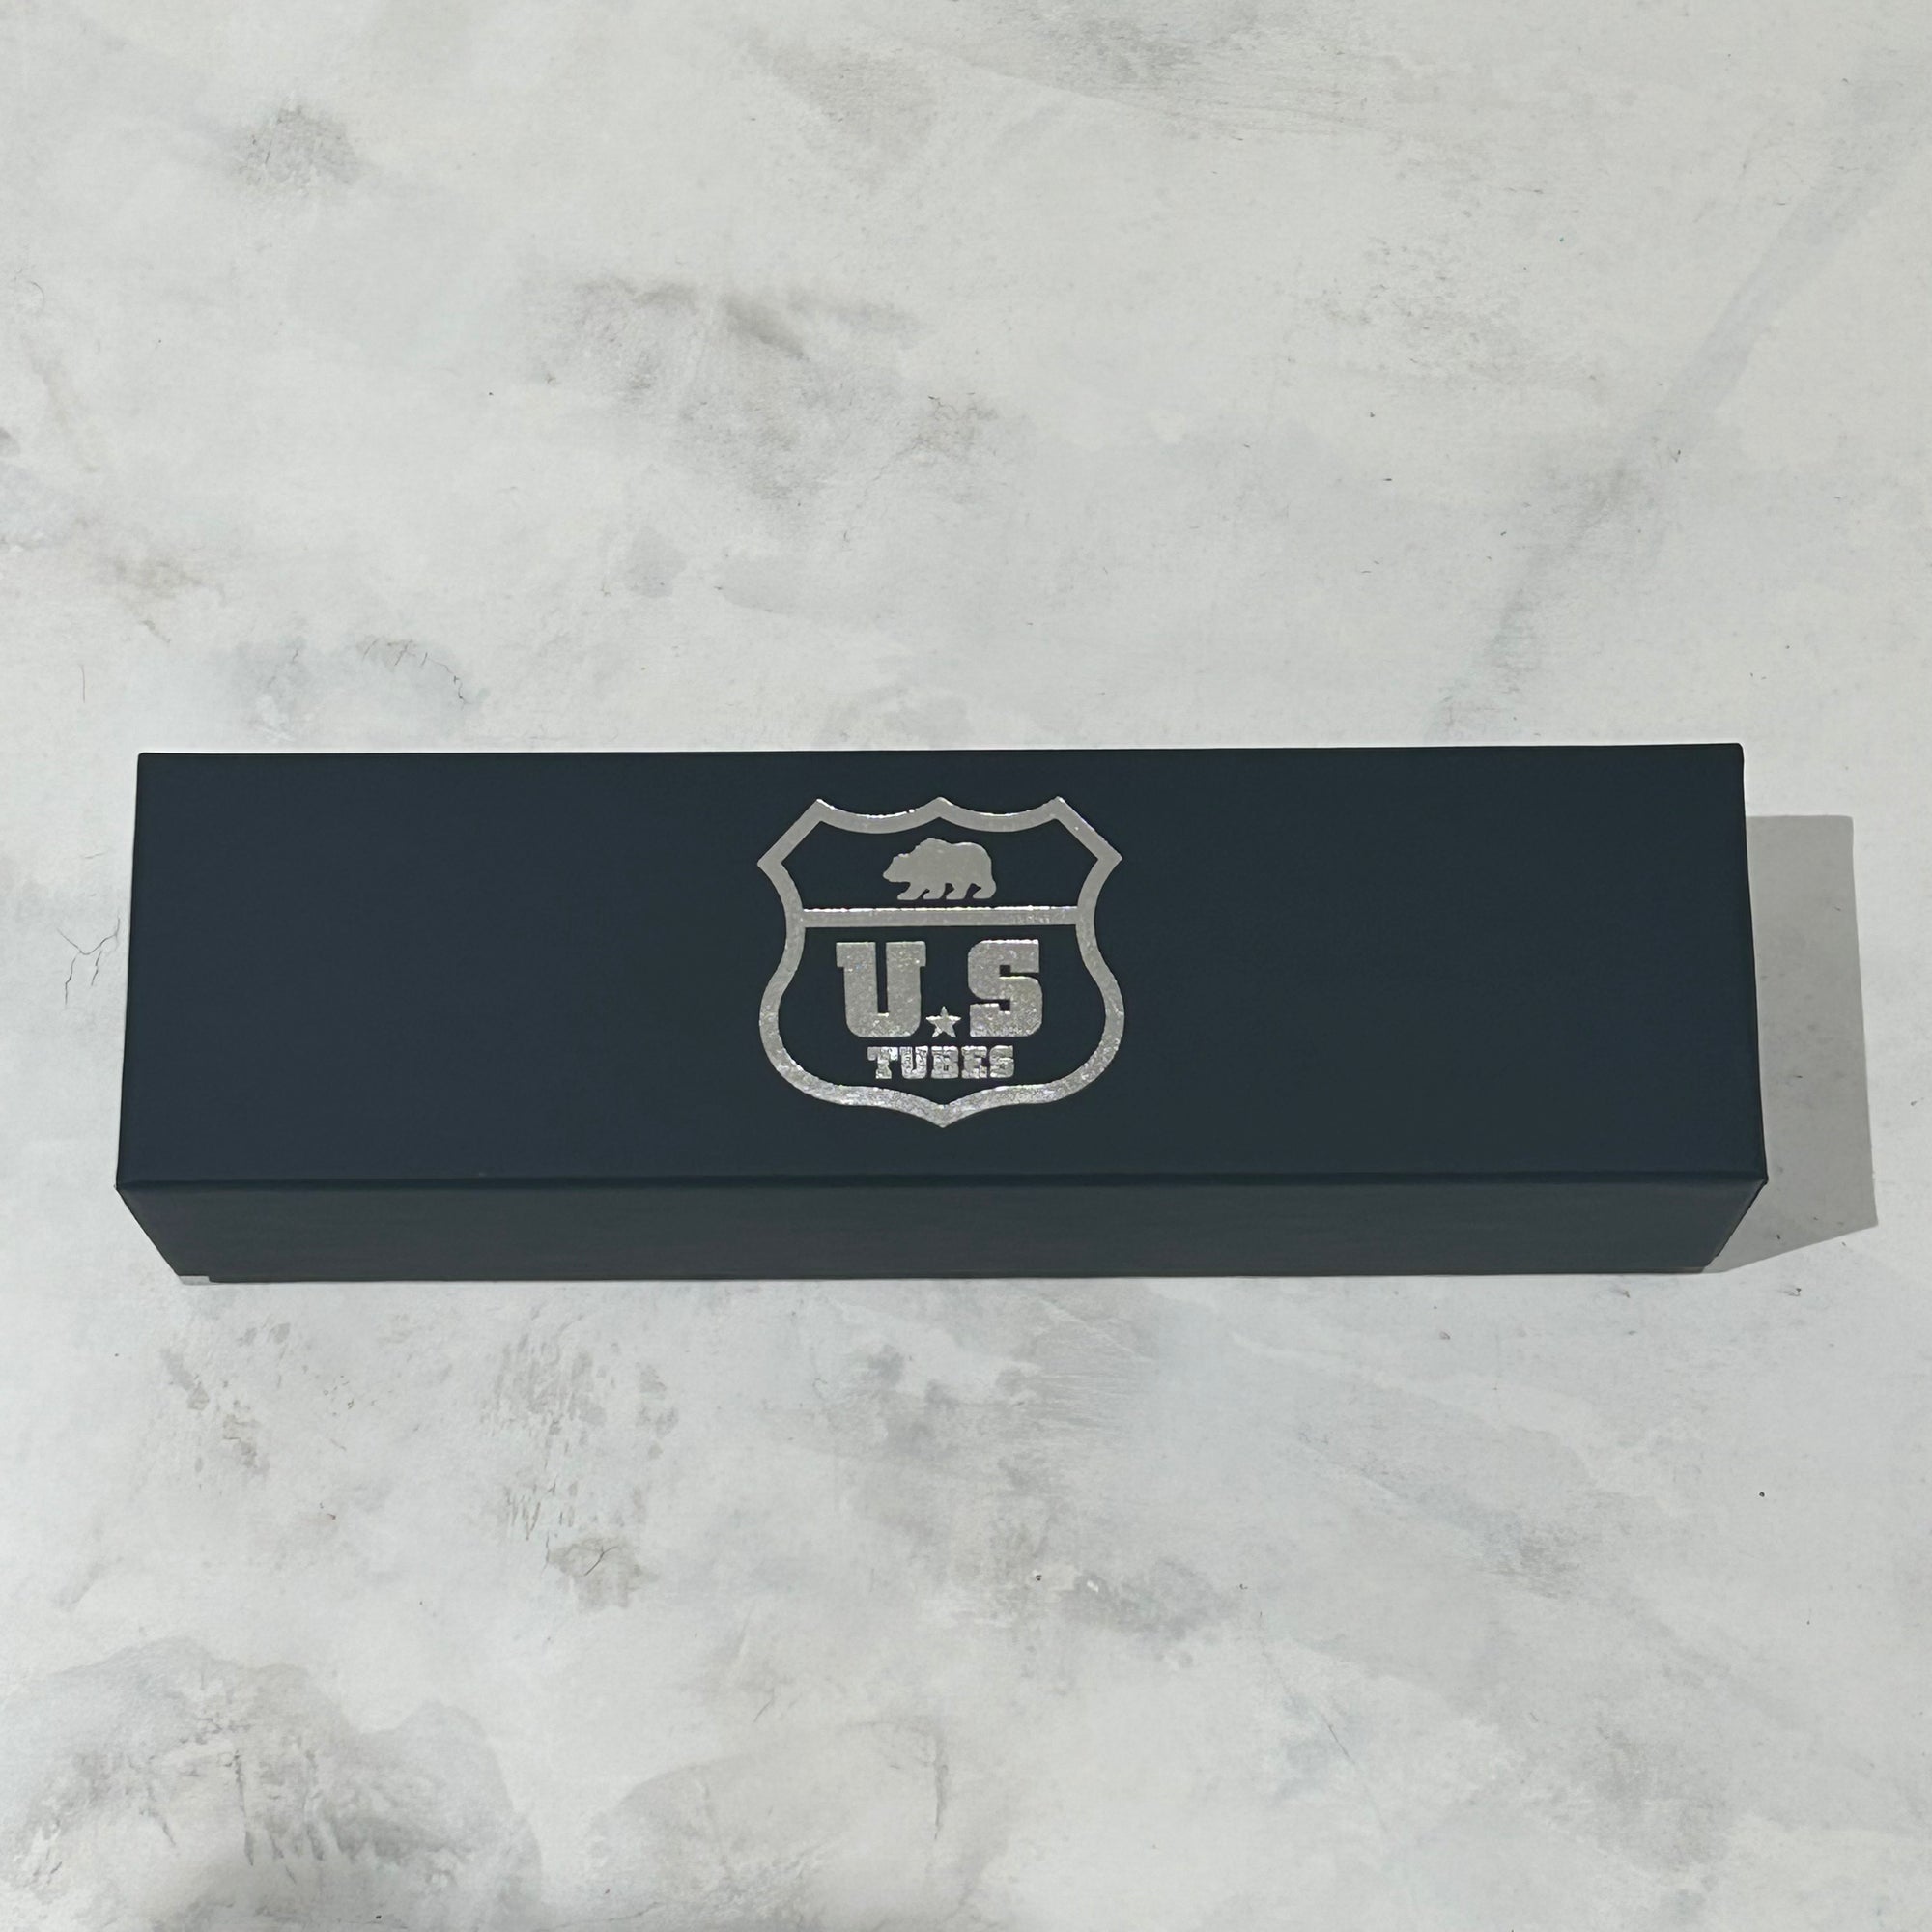 US TUBES Downstem Display Box